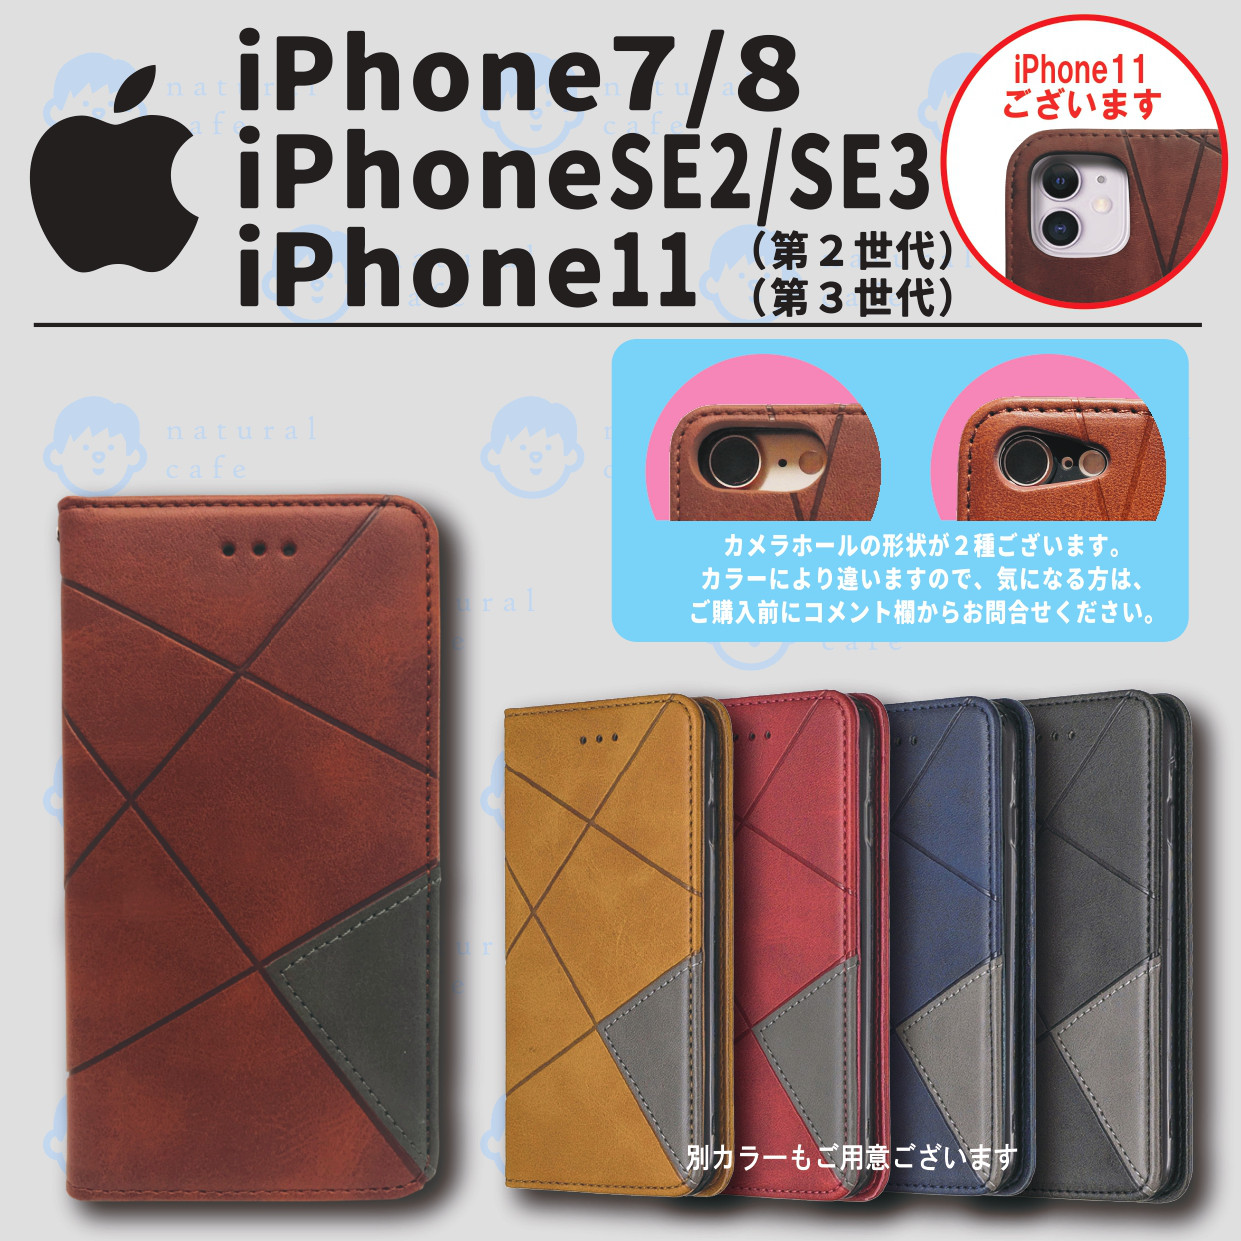 iPhone SE2 SE3 / 7 / 8 / 11 用 カード型収納型 iPhoneケース・カバー